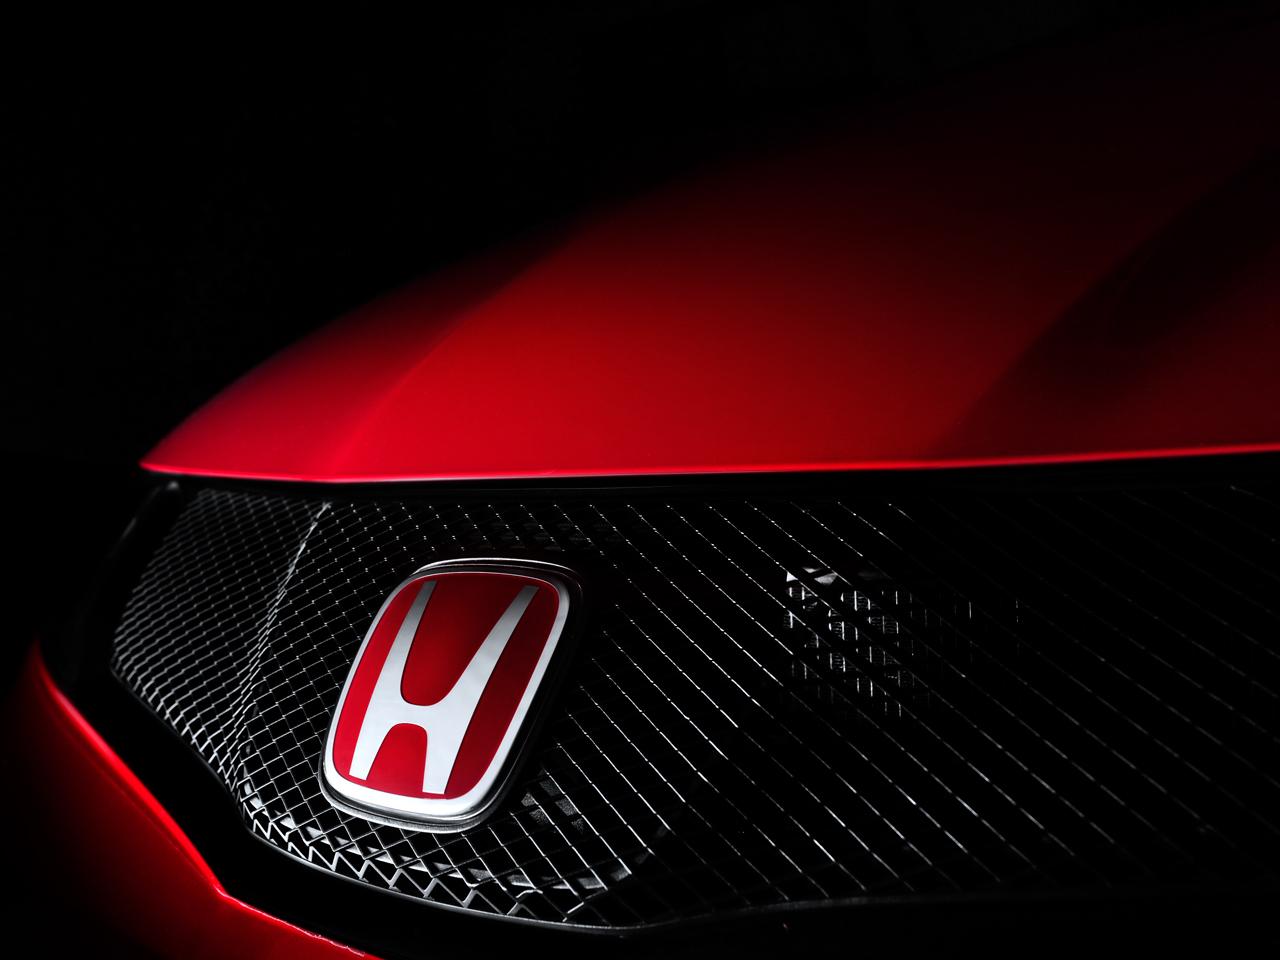 Honda Logo HD Backgrounds